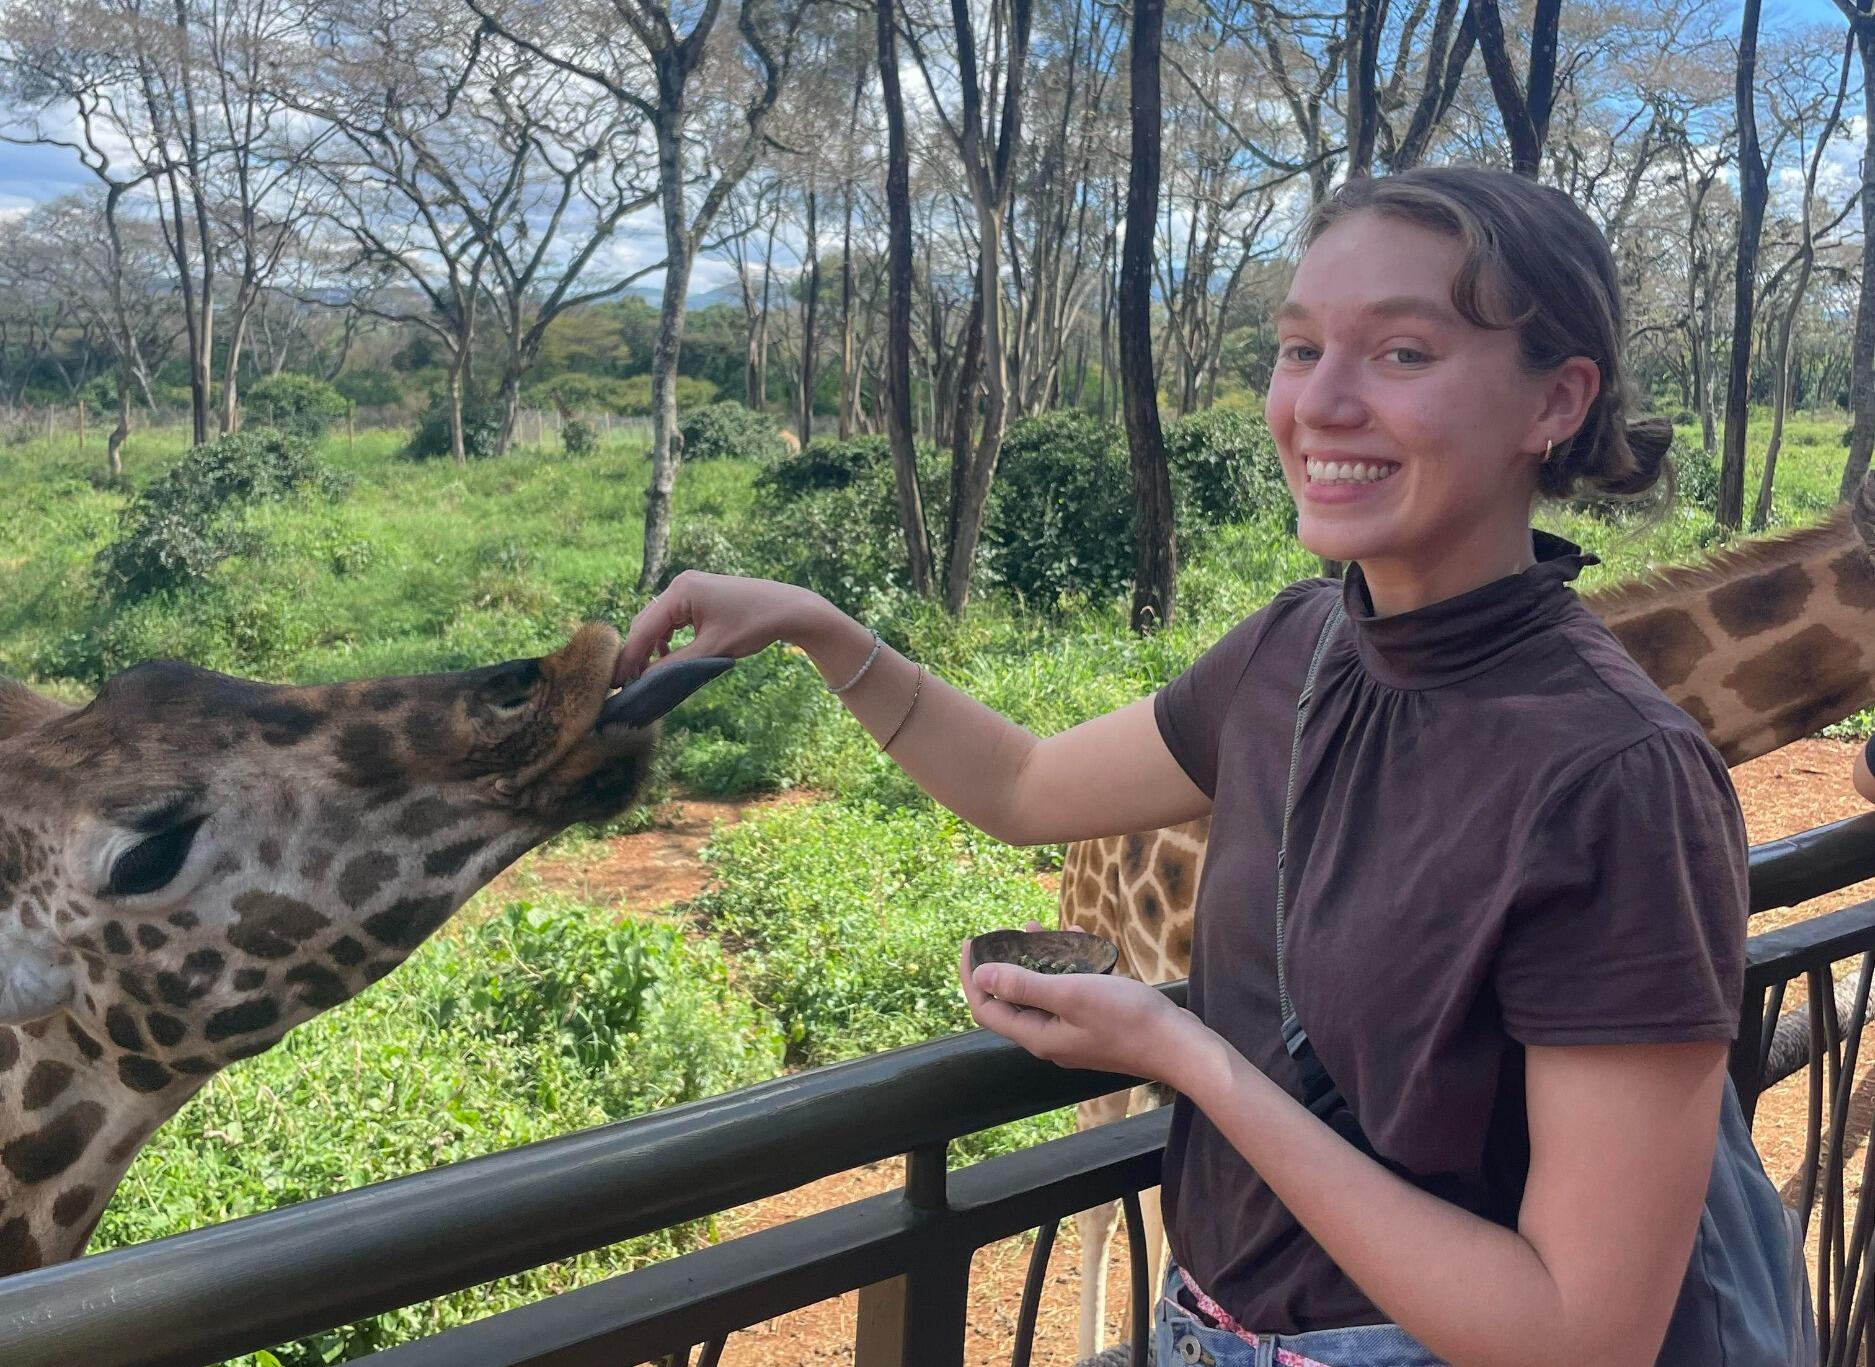 A photo of a woman feeding a giraffe